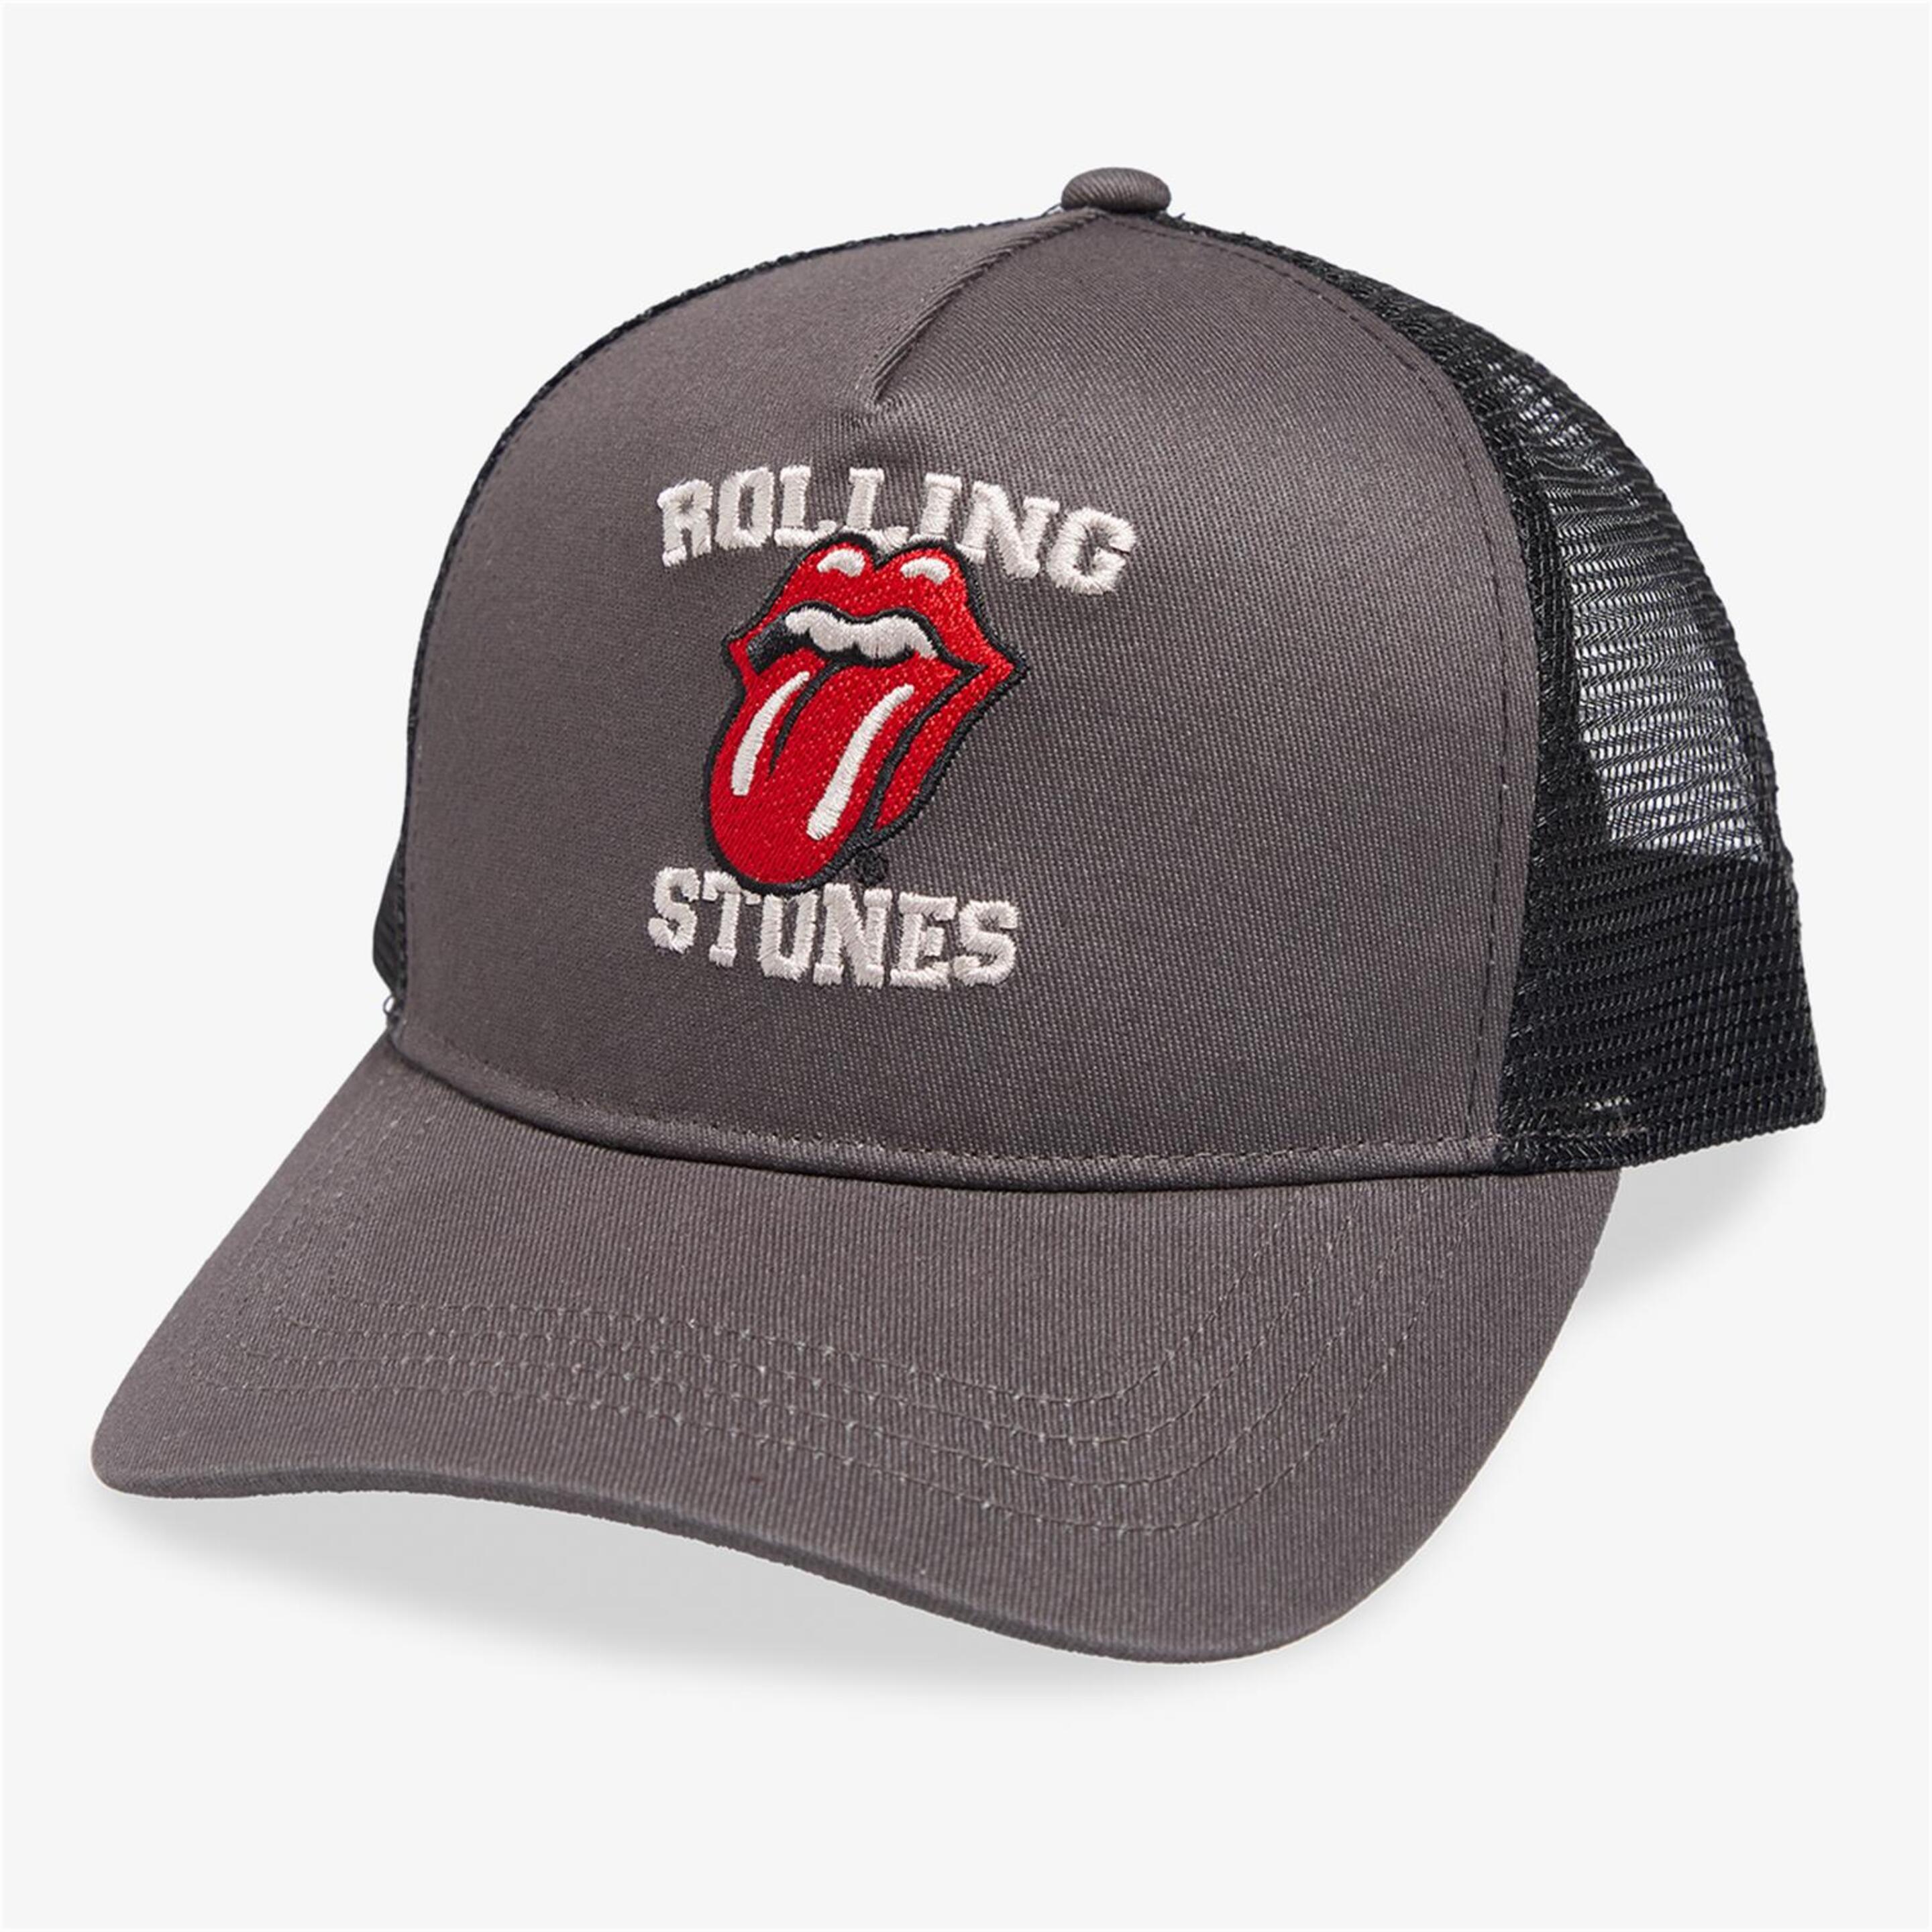 Gorra Rolling Stones - Antracita - Gorra Trucker